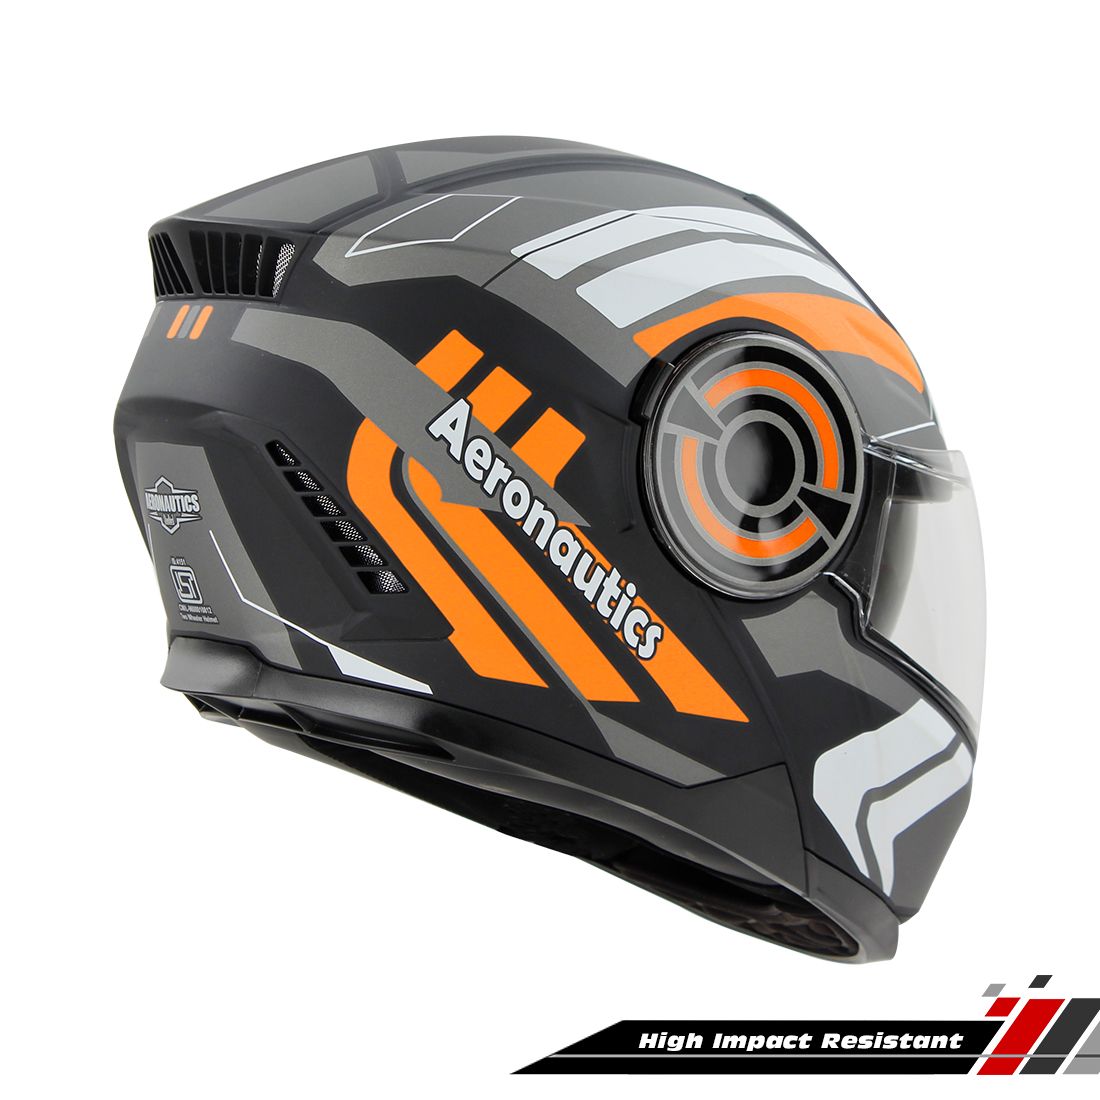 Steelbird SBH-40 Vanguard ISI Certified Full Face Graphic Helmet For Men And Women With Inner Sun Shield (Glossy Black Orange)